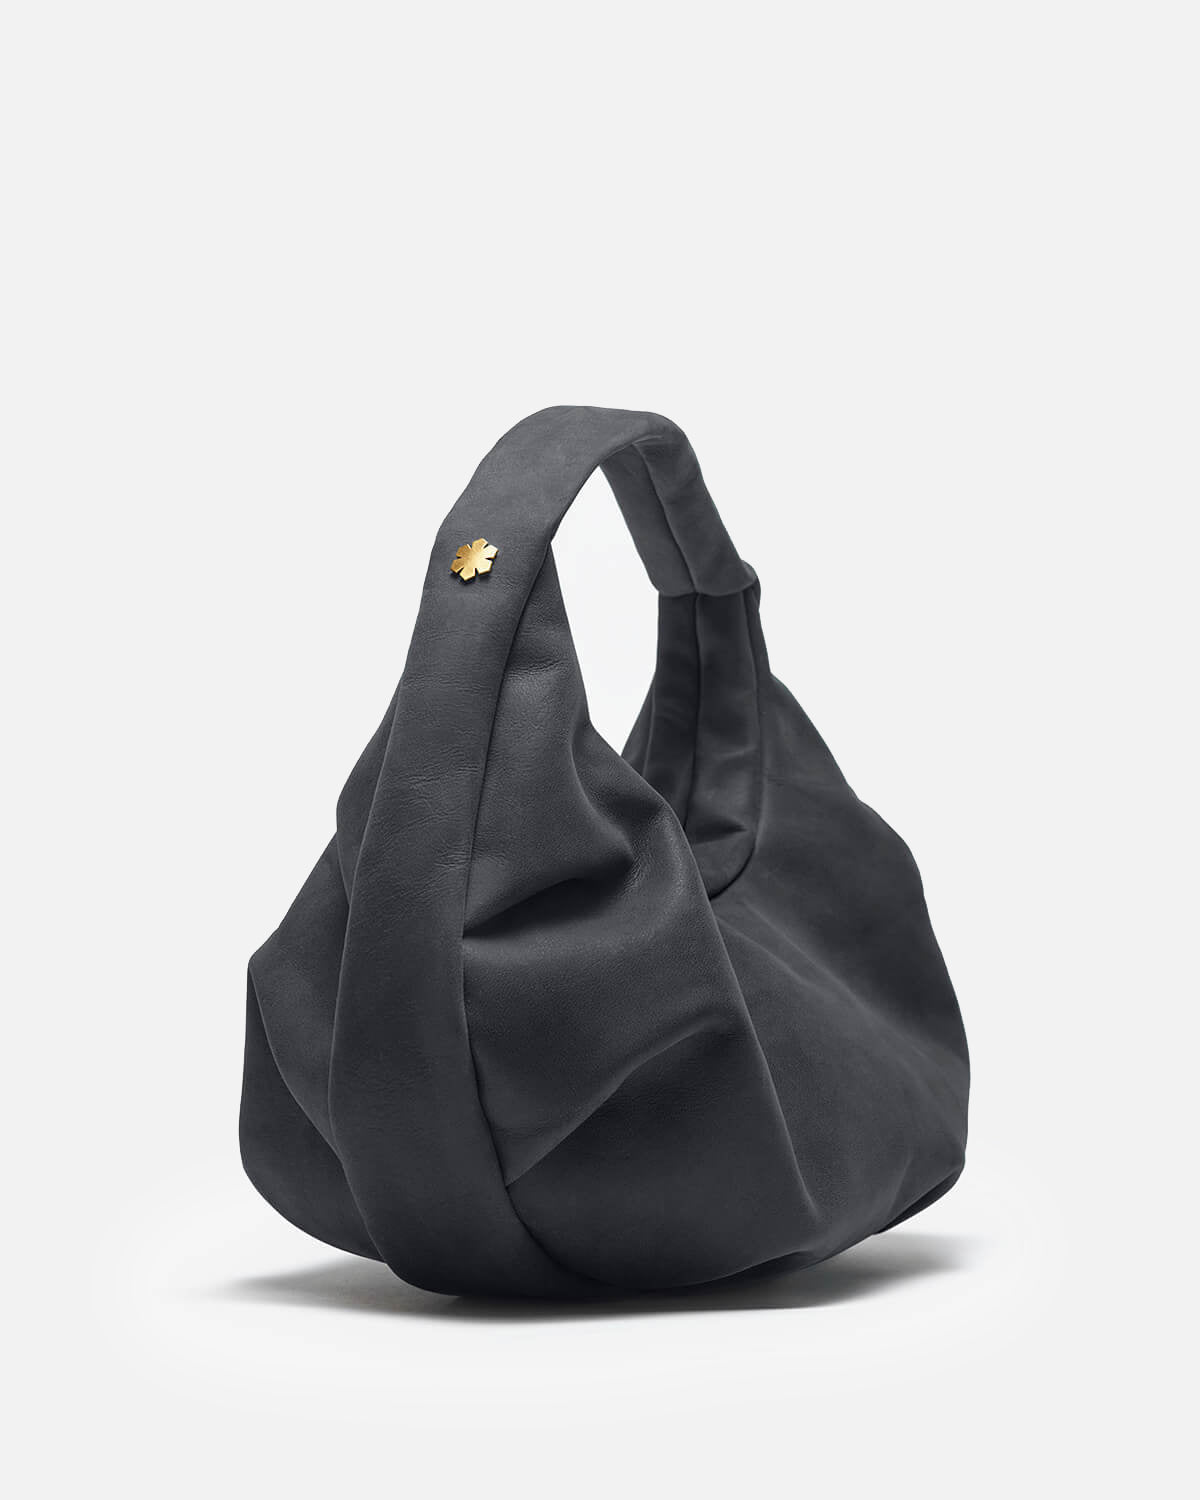 Luksus skind taske » Dansk design RHANDERS